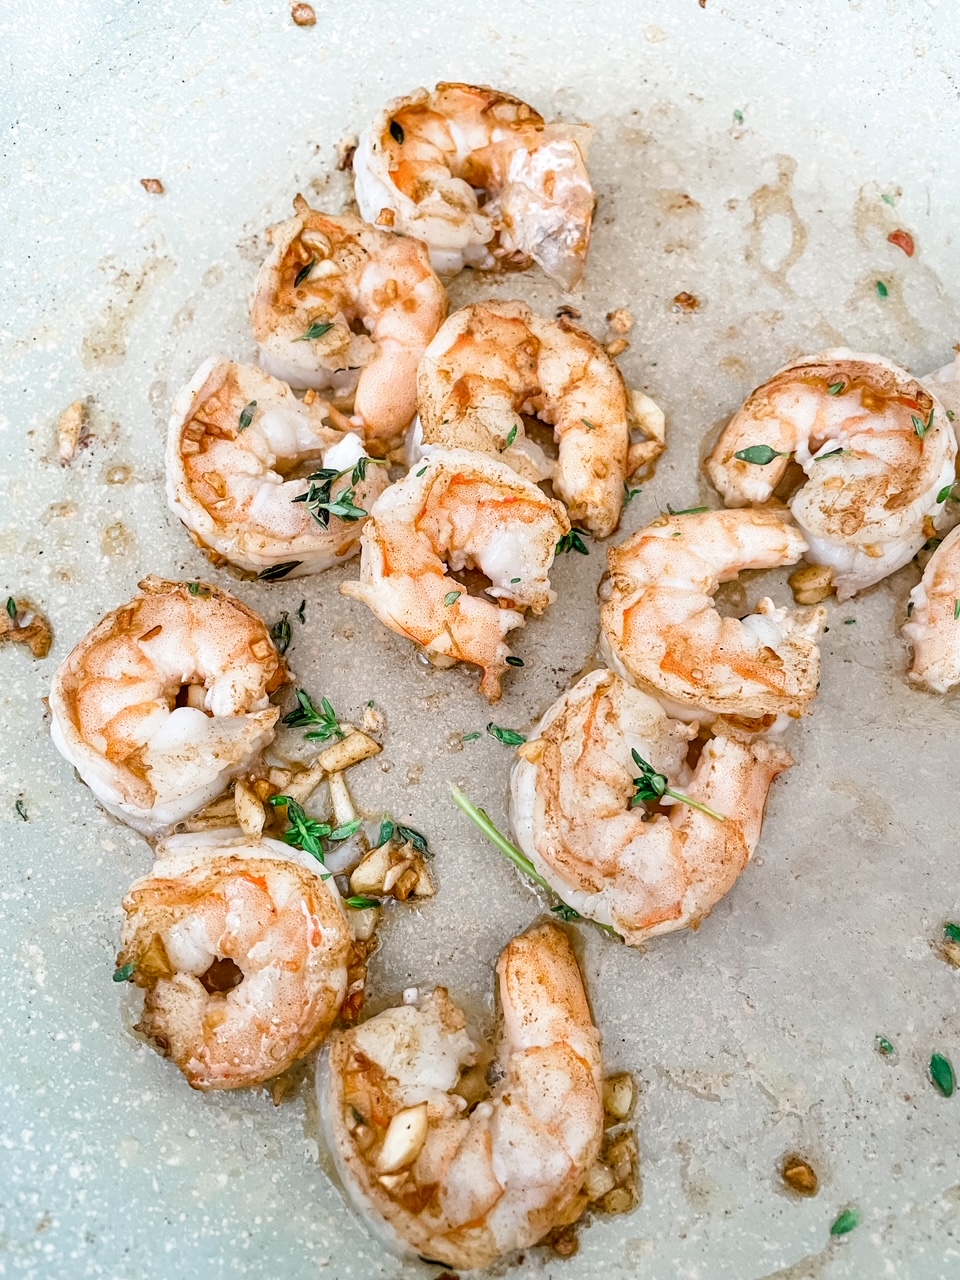 The garlic shrimp in a pan